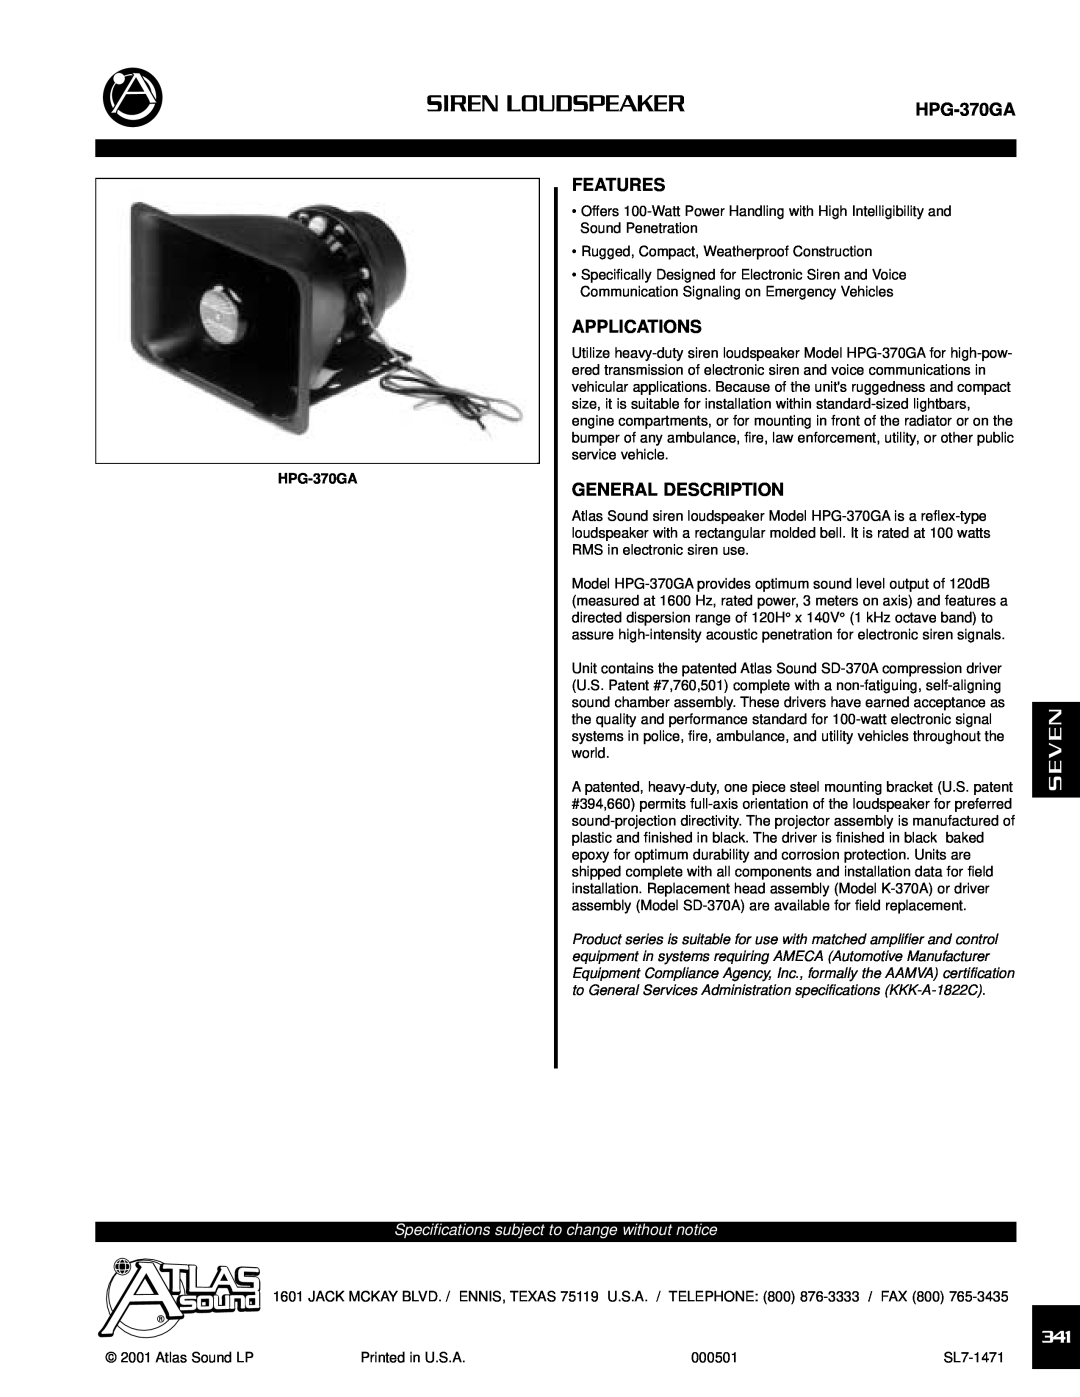 Atlas Sound K-370, SD-370A specifications HPG-370GA, Features, Applications, General Description, Siren Loudspeaker, Seven 